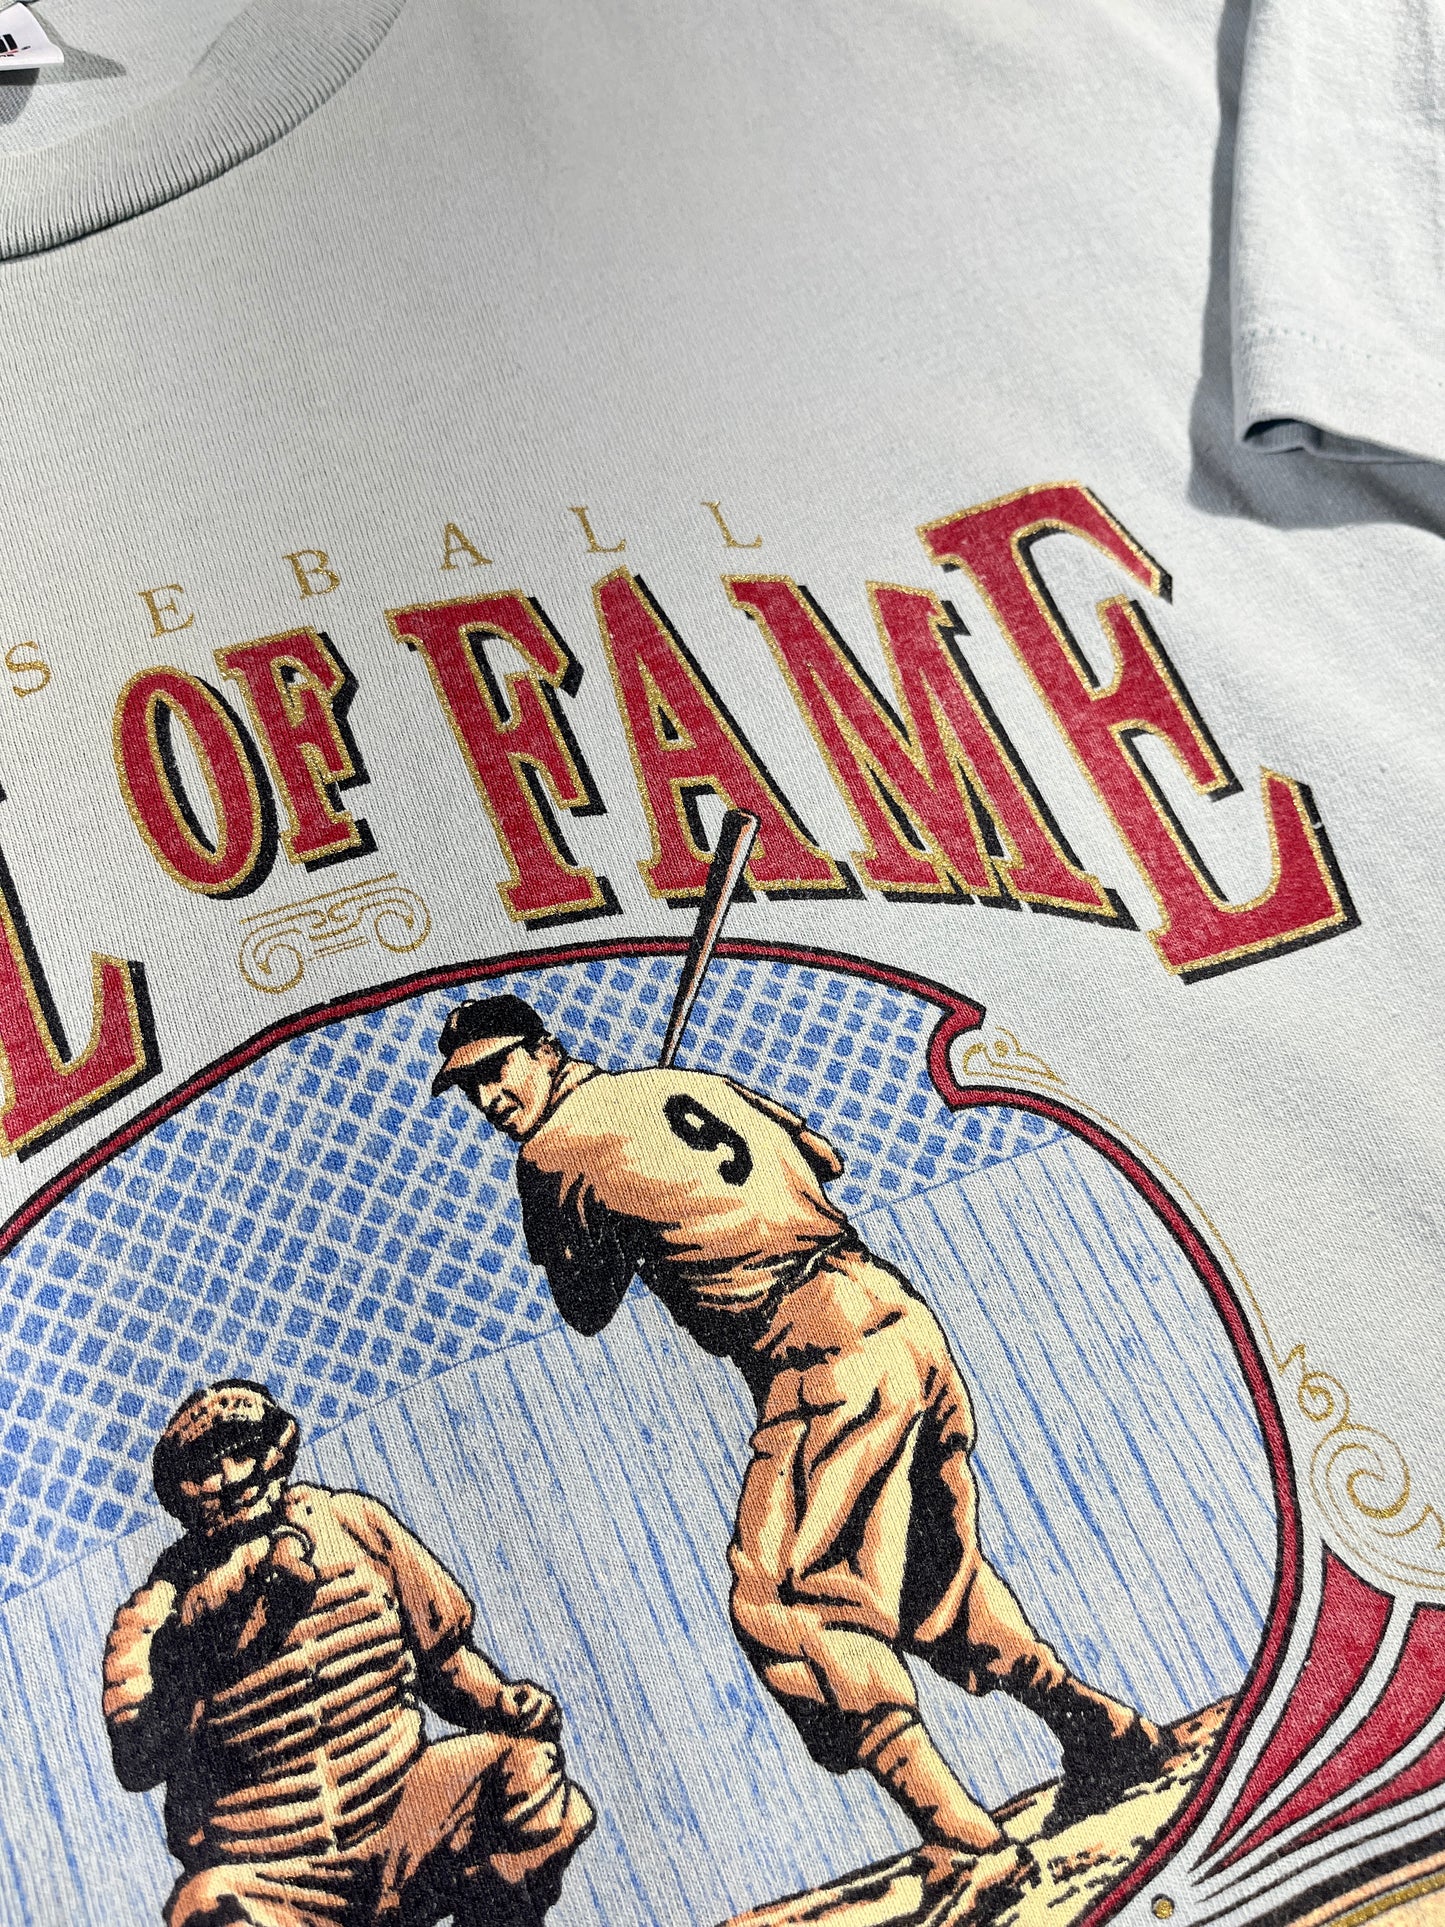 Vintage Baseball Hall Of Fame T-Shirt MLB Cooperstown 90's